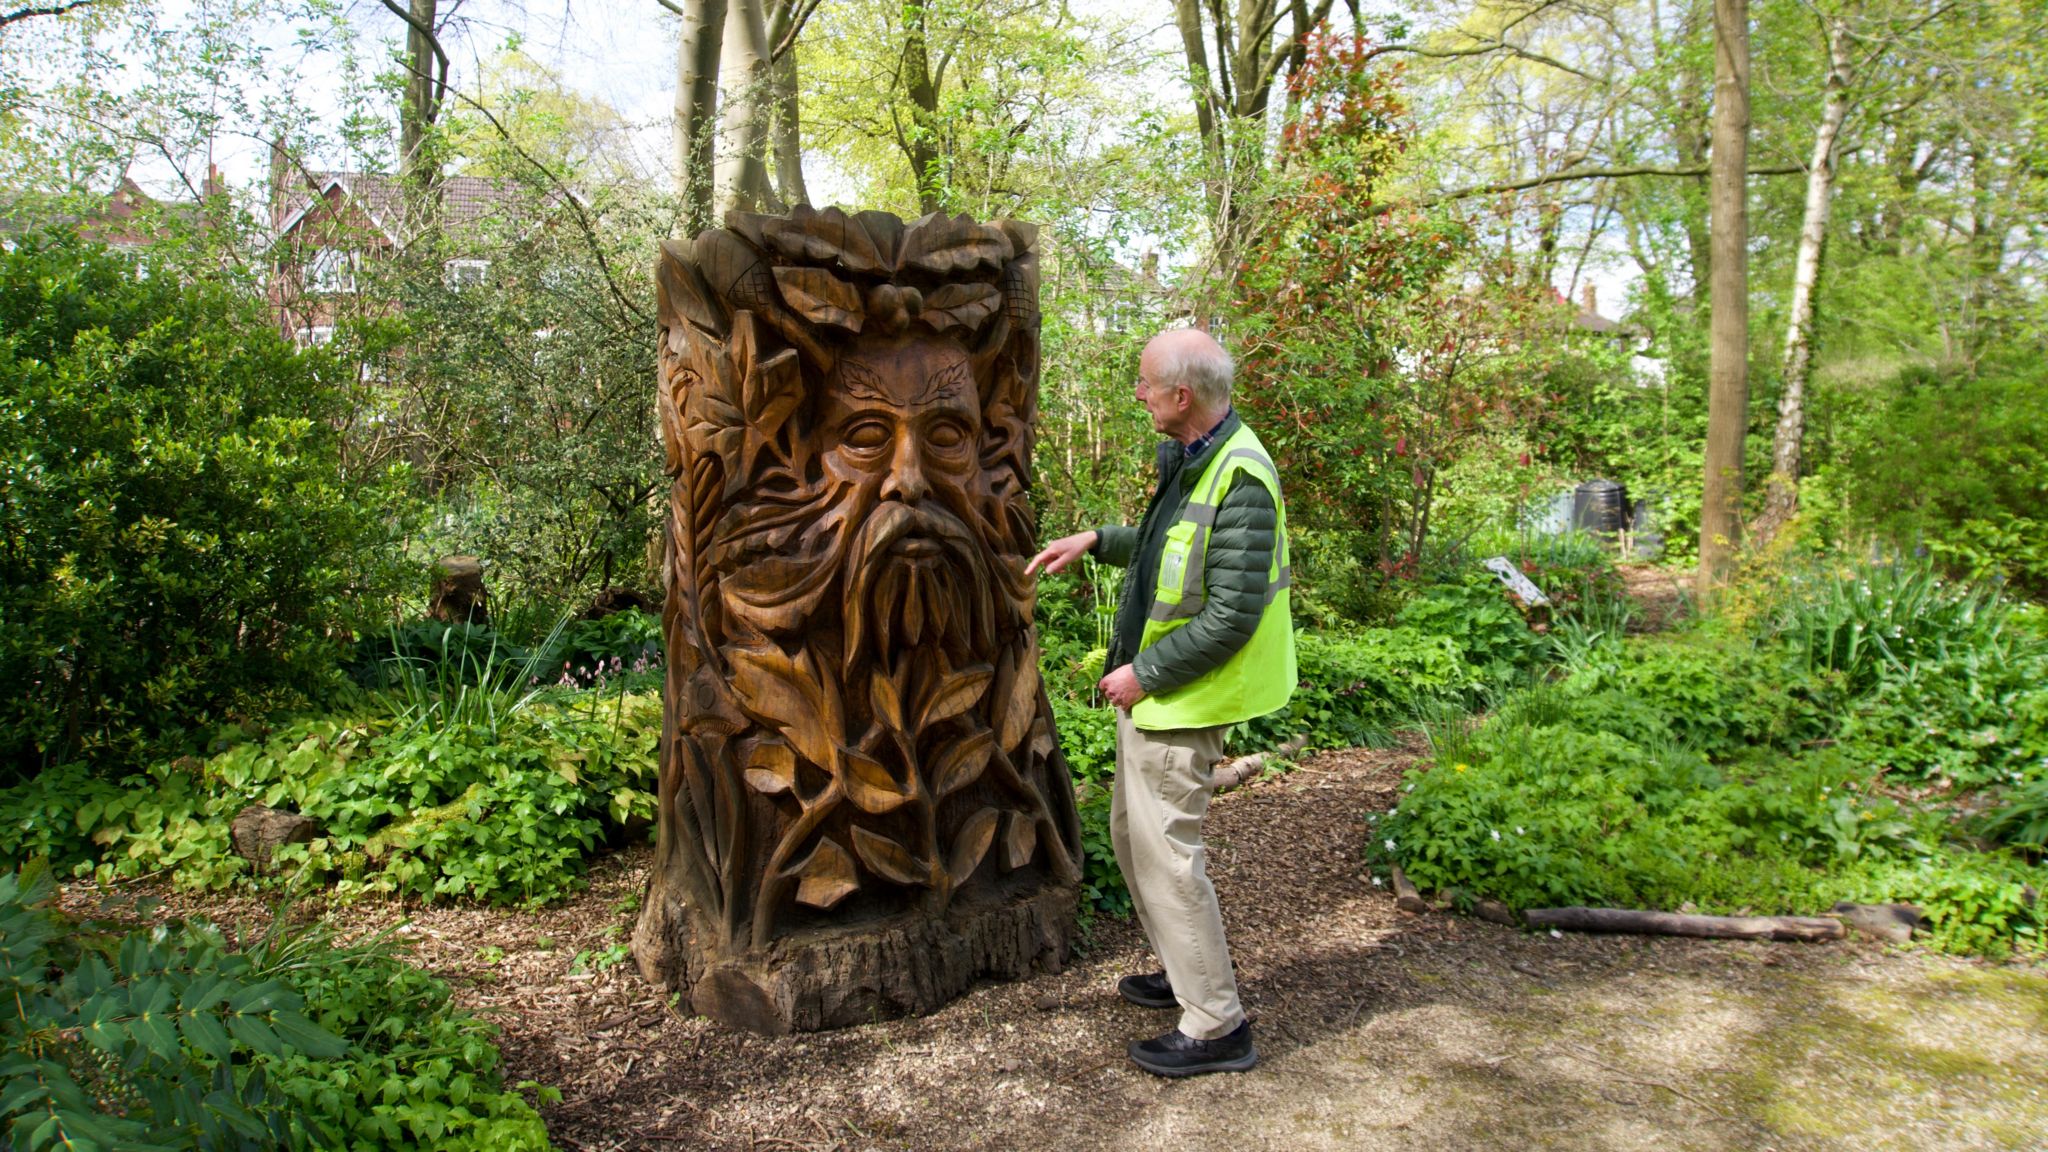 Green Man at Walsall Arboretum